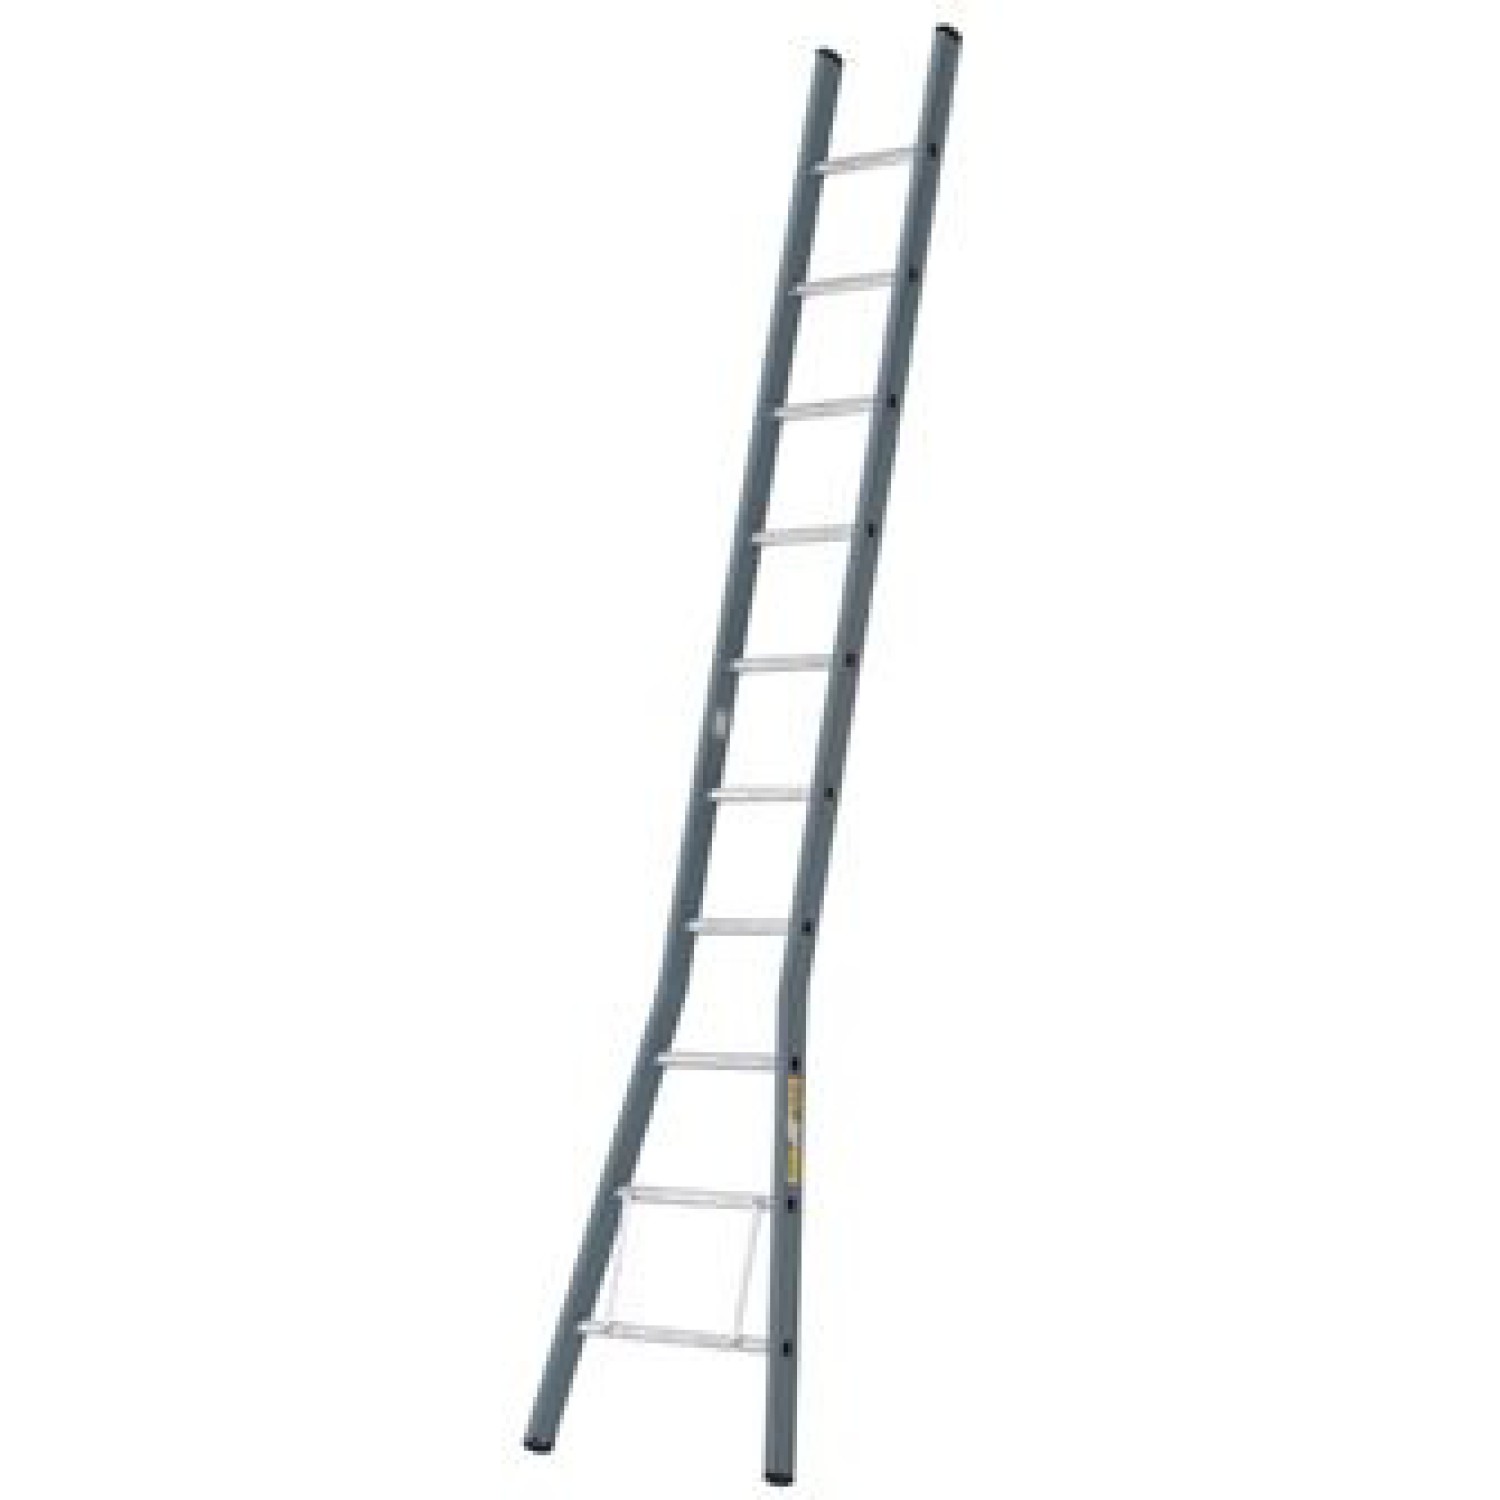 dirks enkele uitgebogen ladder 245 meter